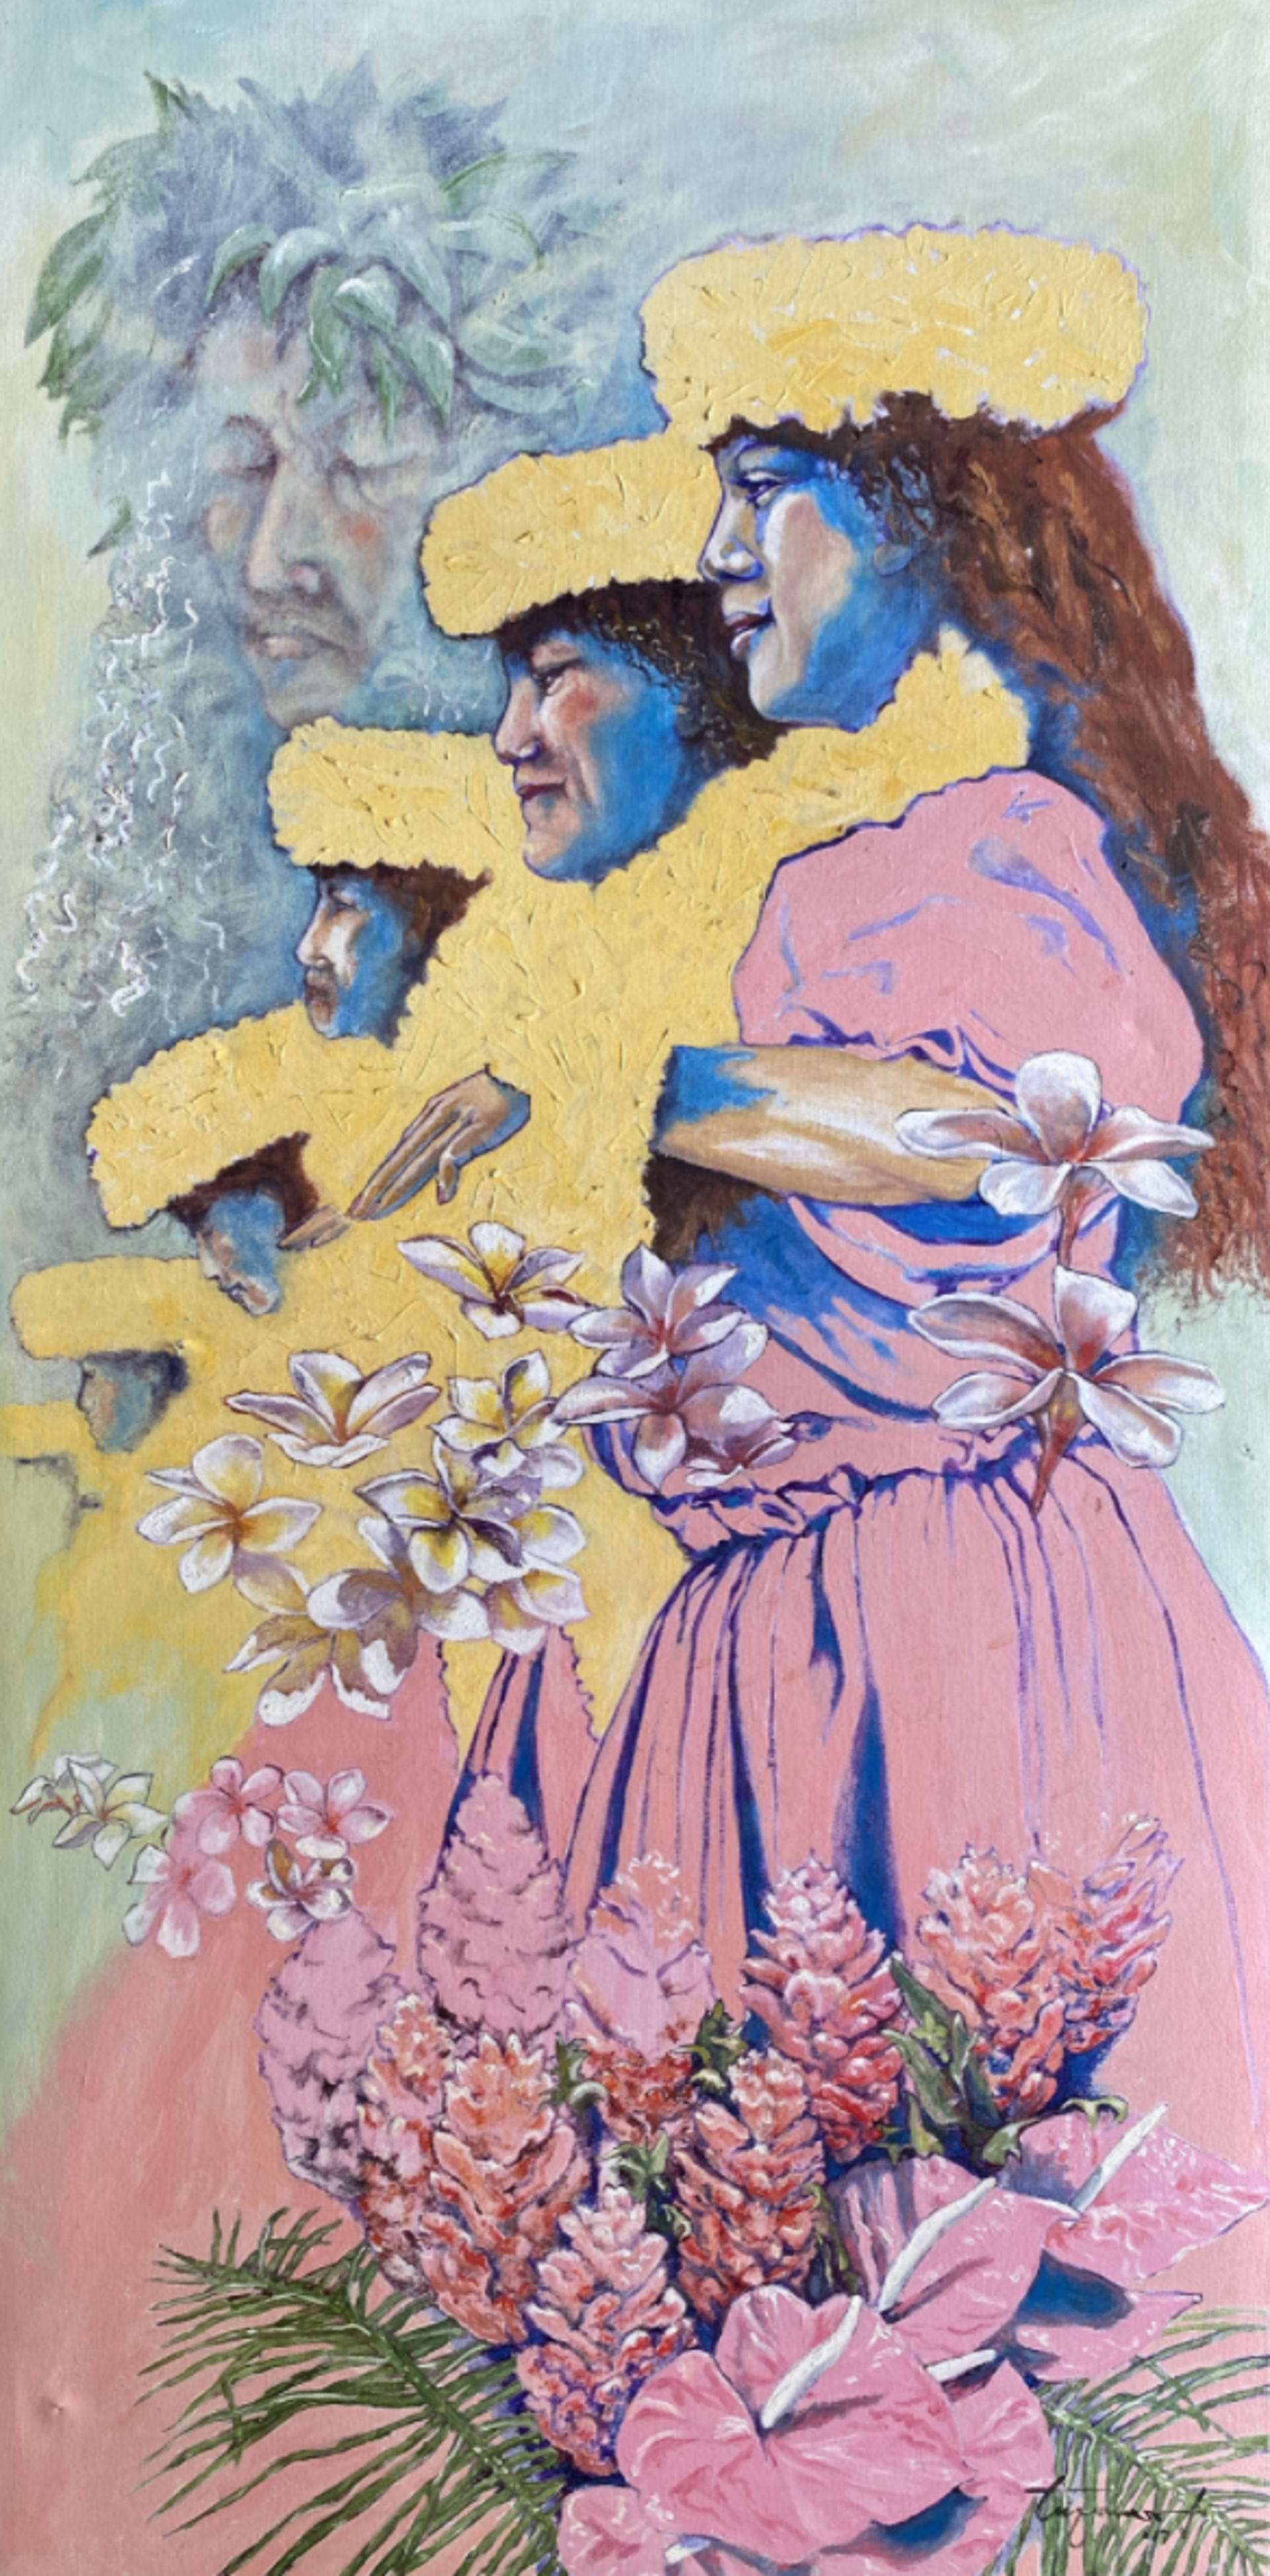 Lei I Ka Mamo Hulu Melemele (Lei Of Yellow, Mamo Flowers) by Hank Taufaasau